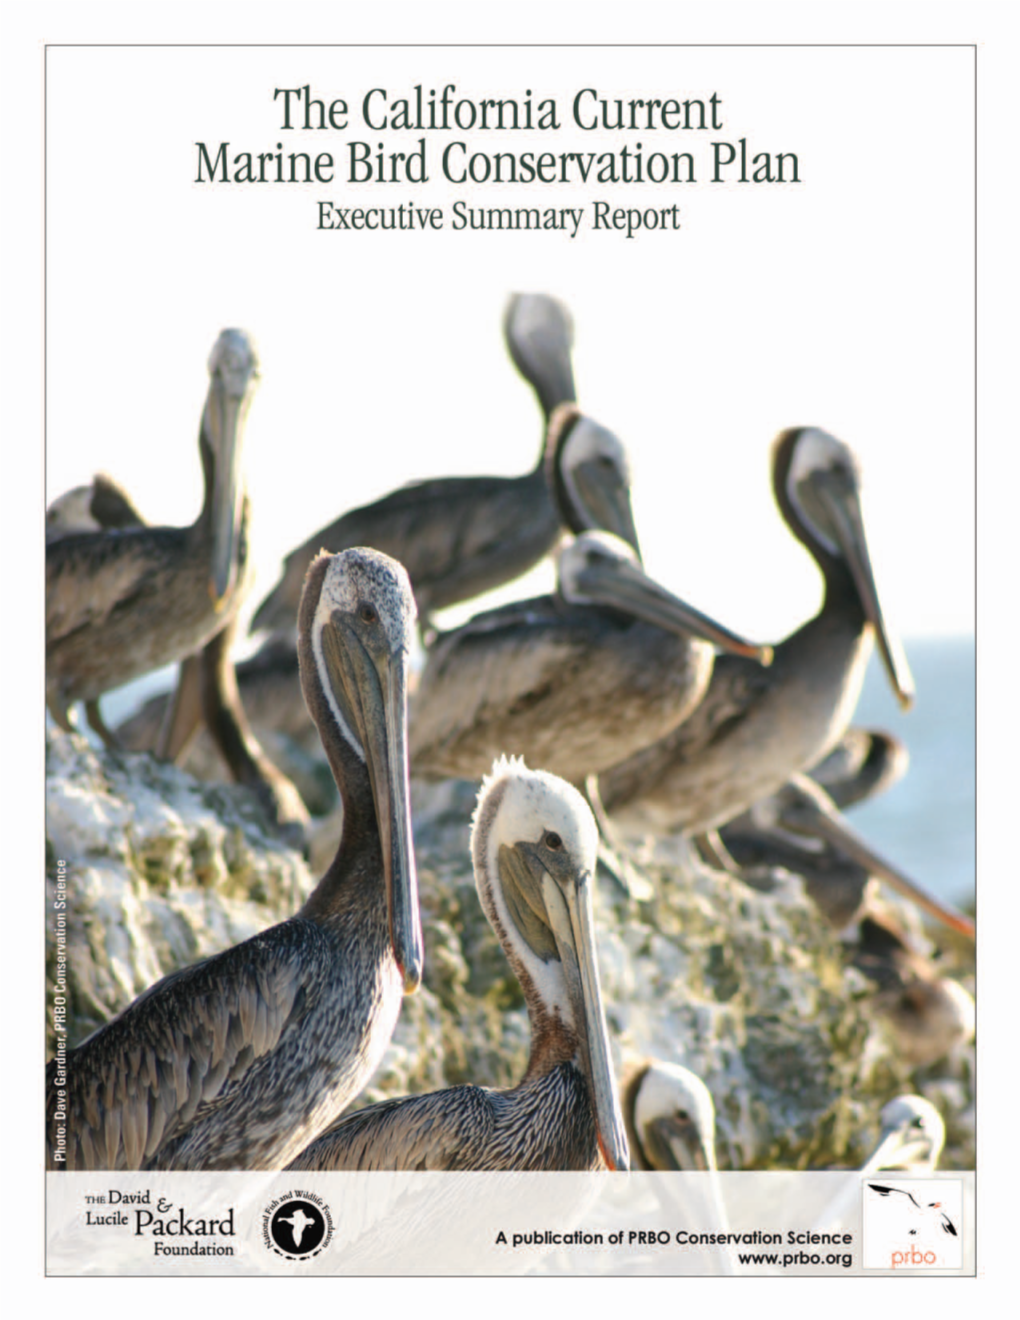 The California Current Marine Bird Conservation Plan Executive Summary Report